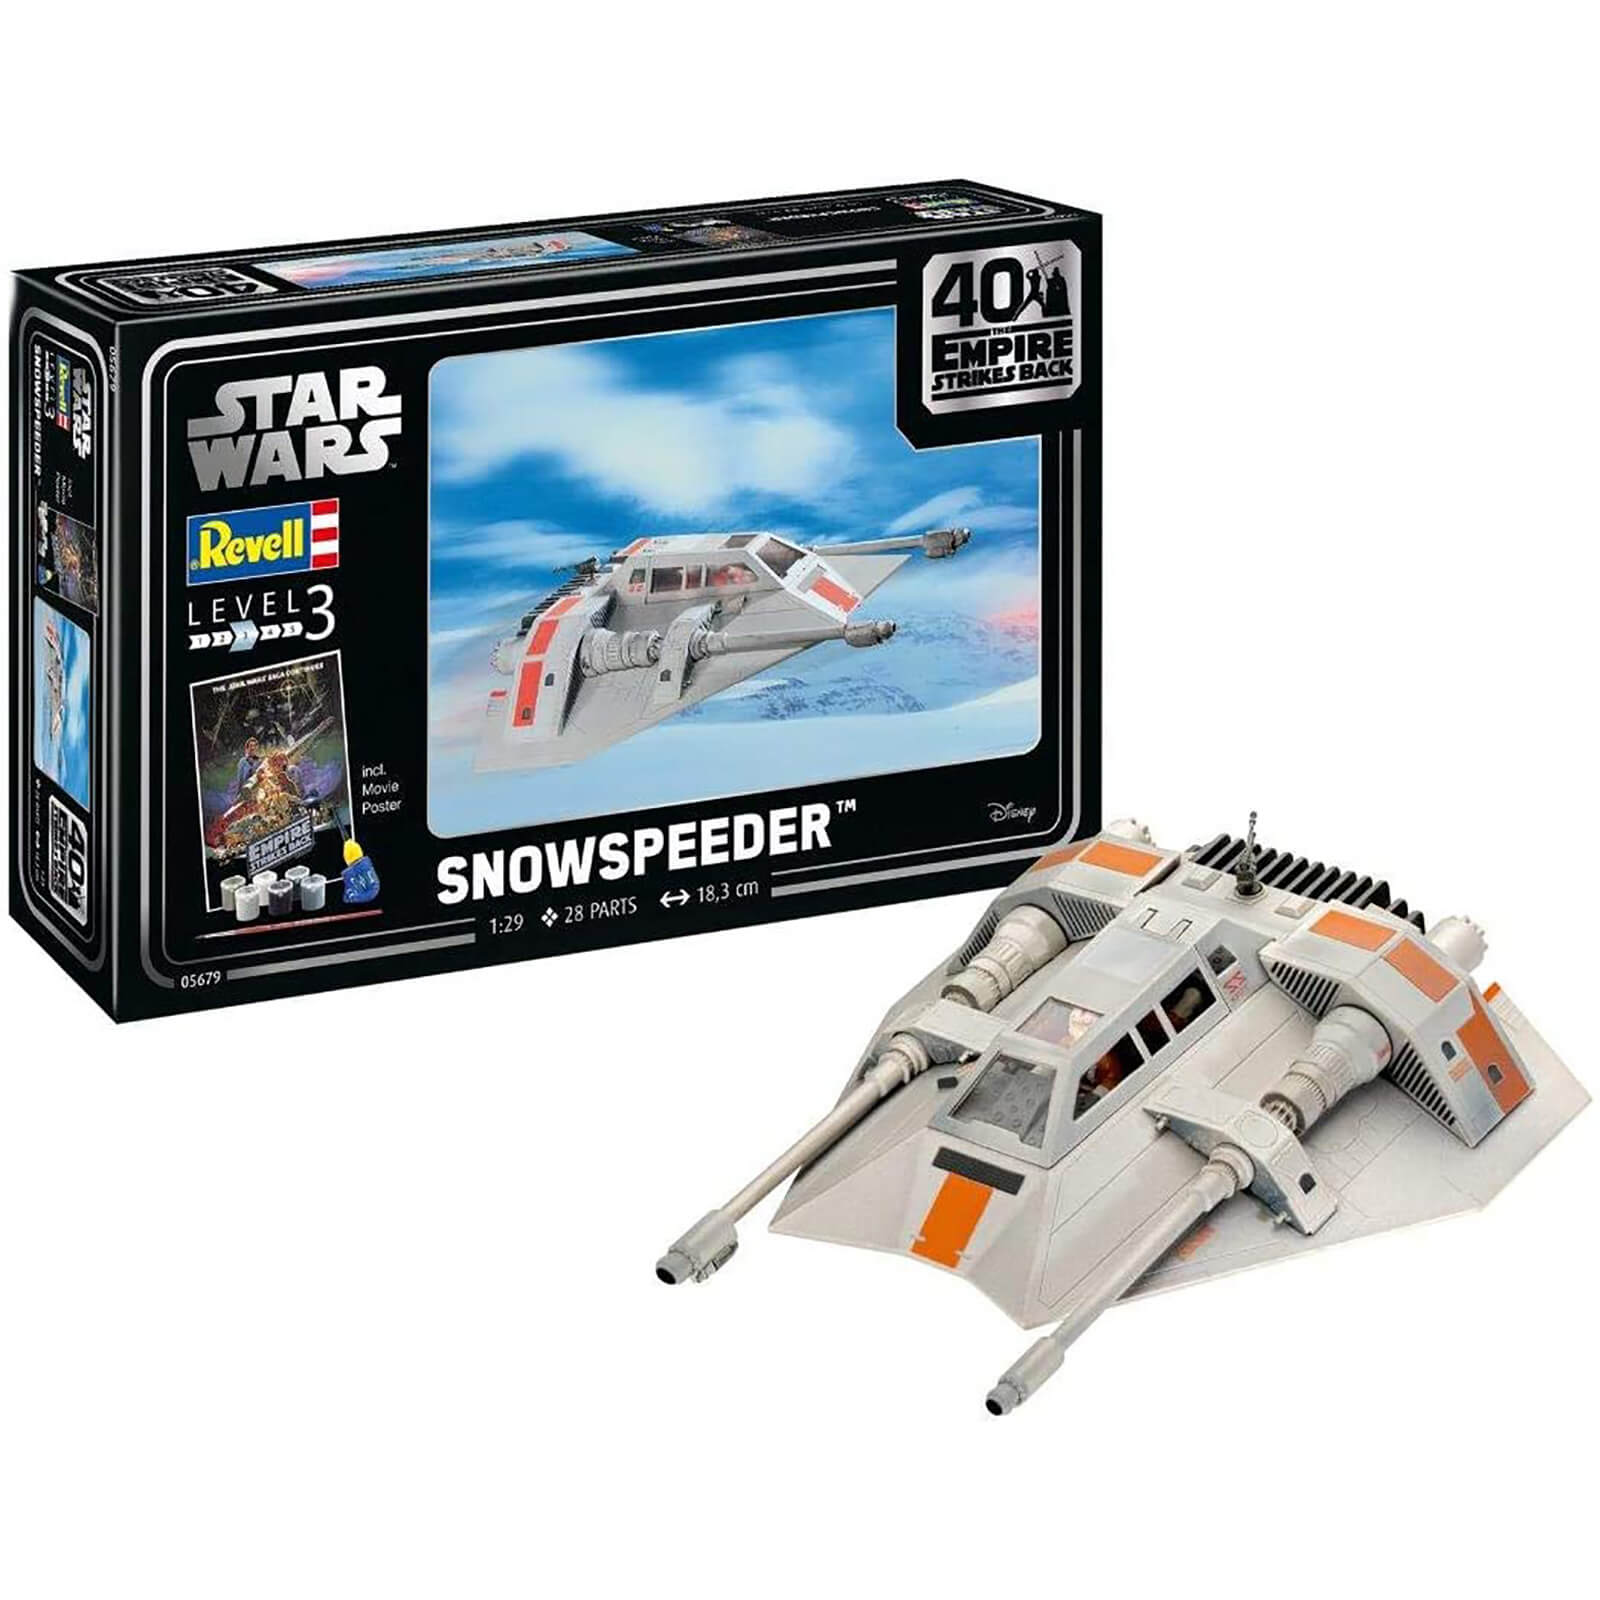 Revell Star Wars Snowspeeder (The Empire Strikes Back 40th Anniversary) Plastic Model Gift Set 1:29 